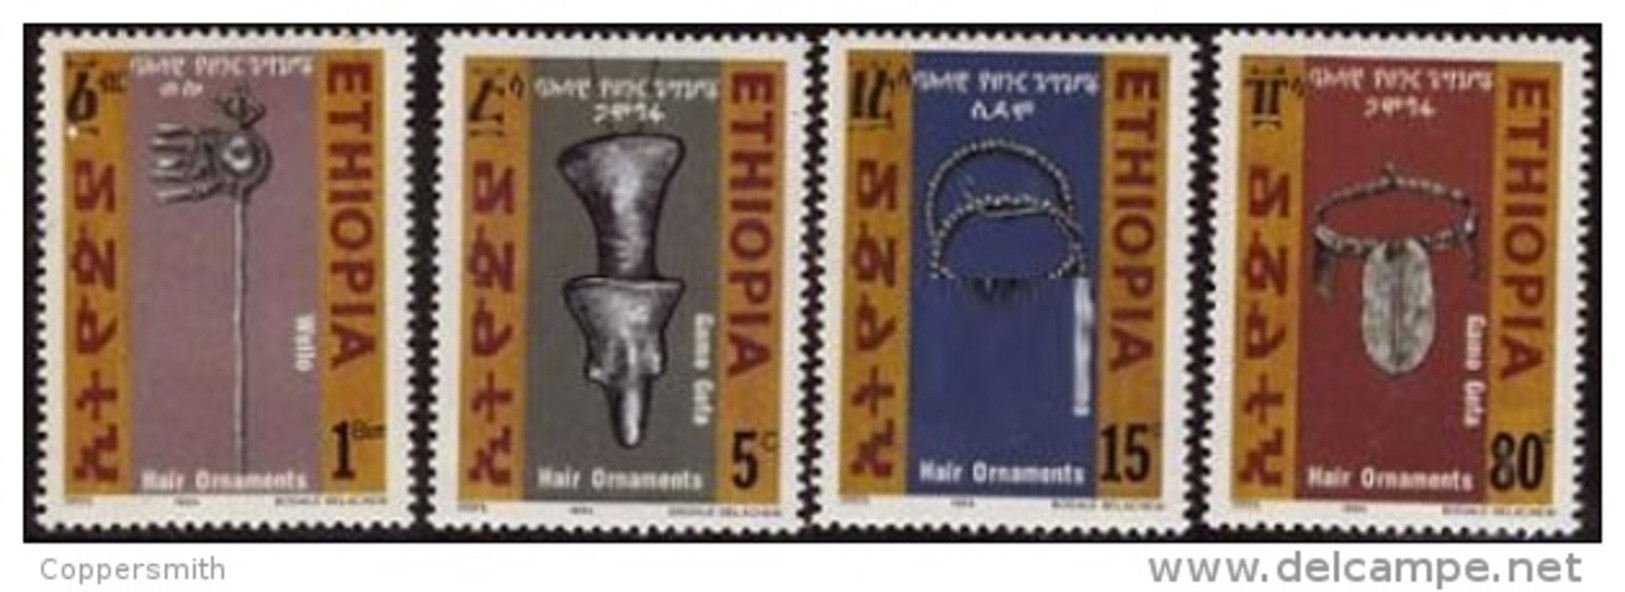 (357) Ethiopia / Ethiopie  Hair Styling / Jewellery / 1994 ** / Mnh  Michel 1482-85 - Etiopía